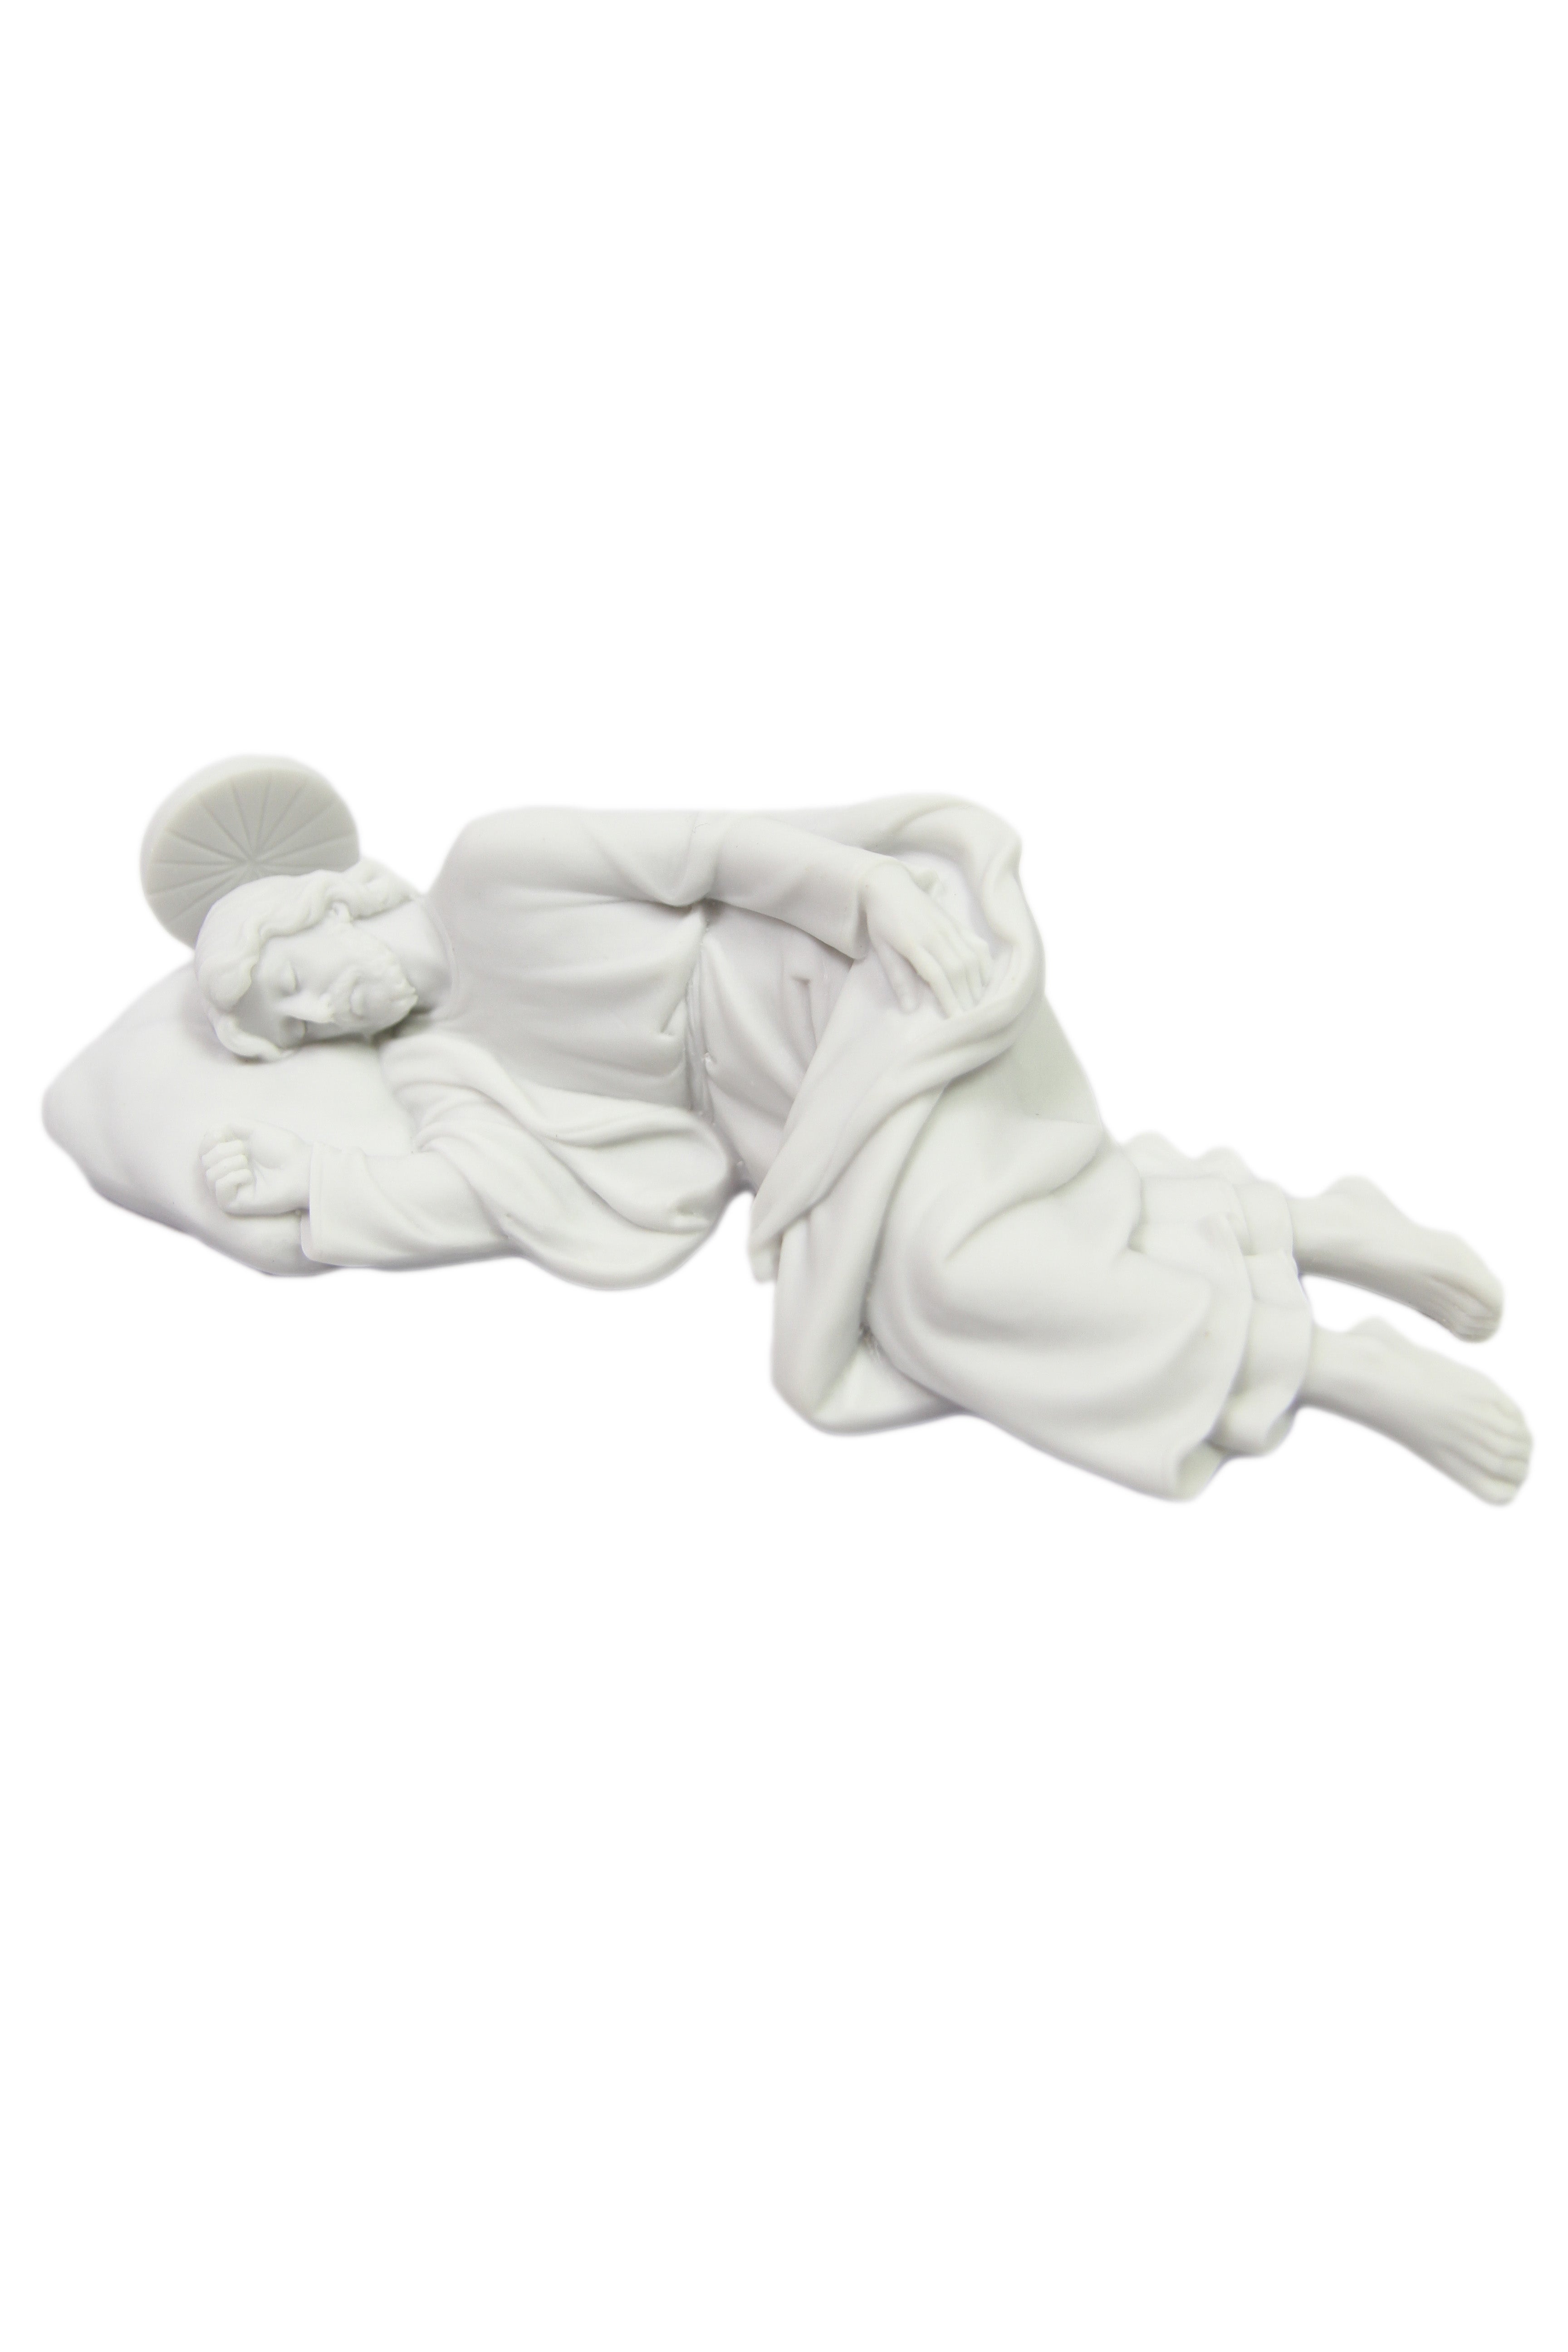 8" Sleeping Saint St Joseph Catholic Statue Sculpture Figurine Vittoria Collection Made in Italy Religious Pope Francis